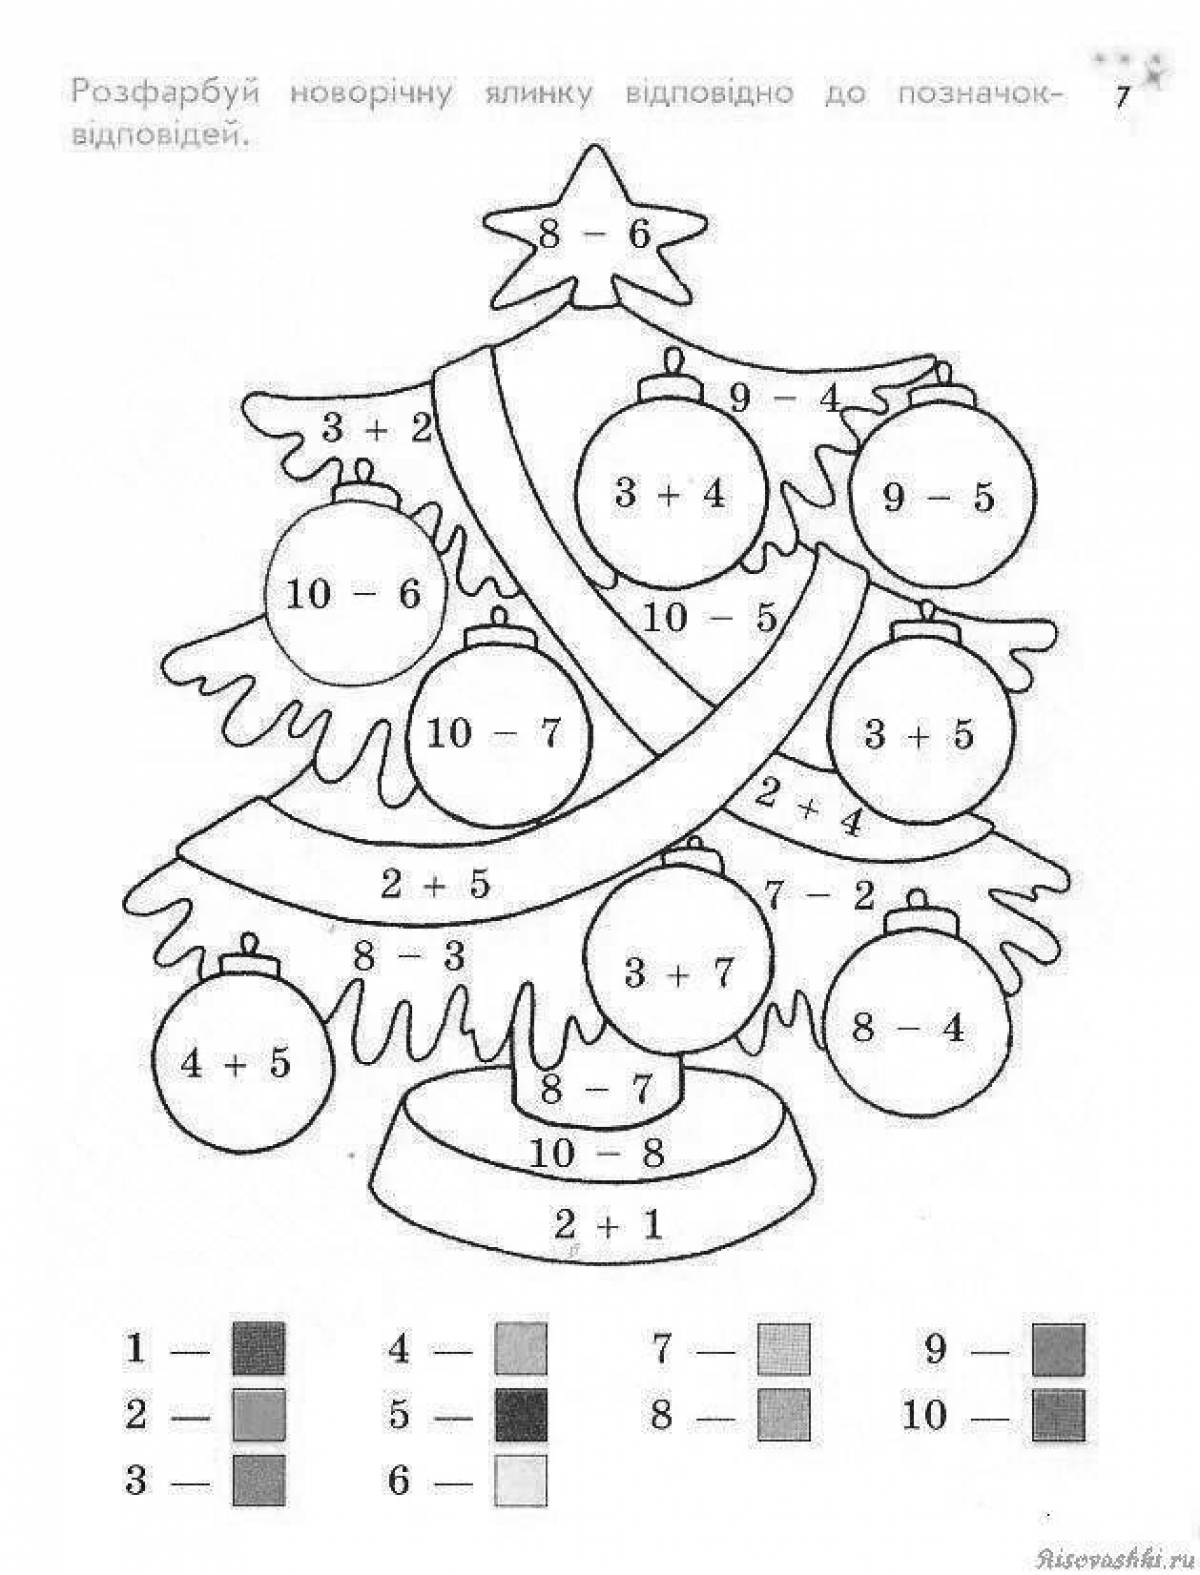 Festive Christmas math coloring book